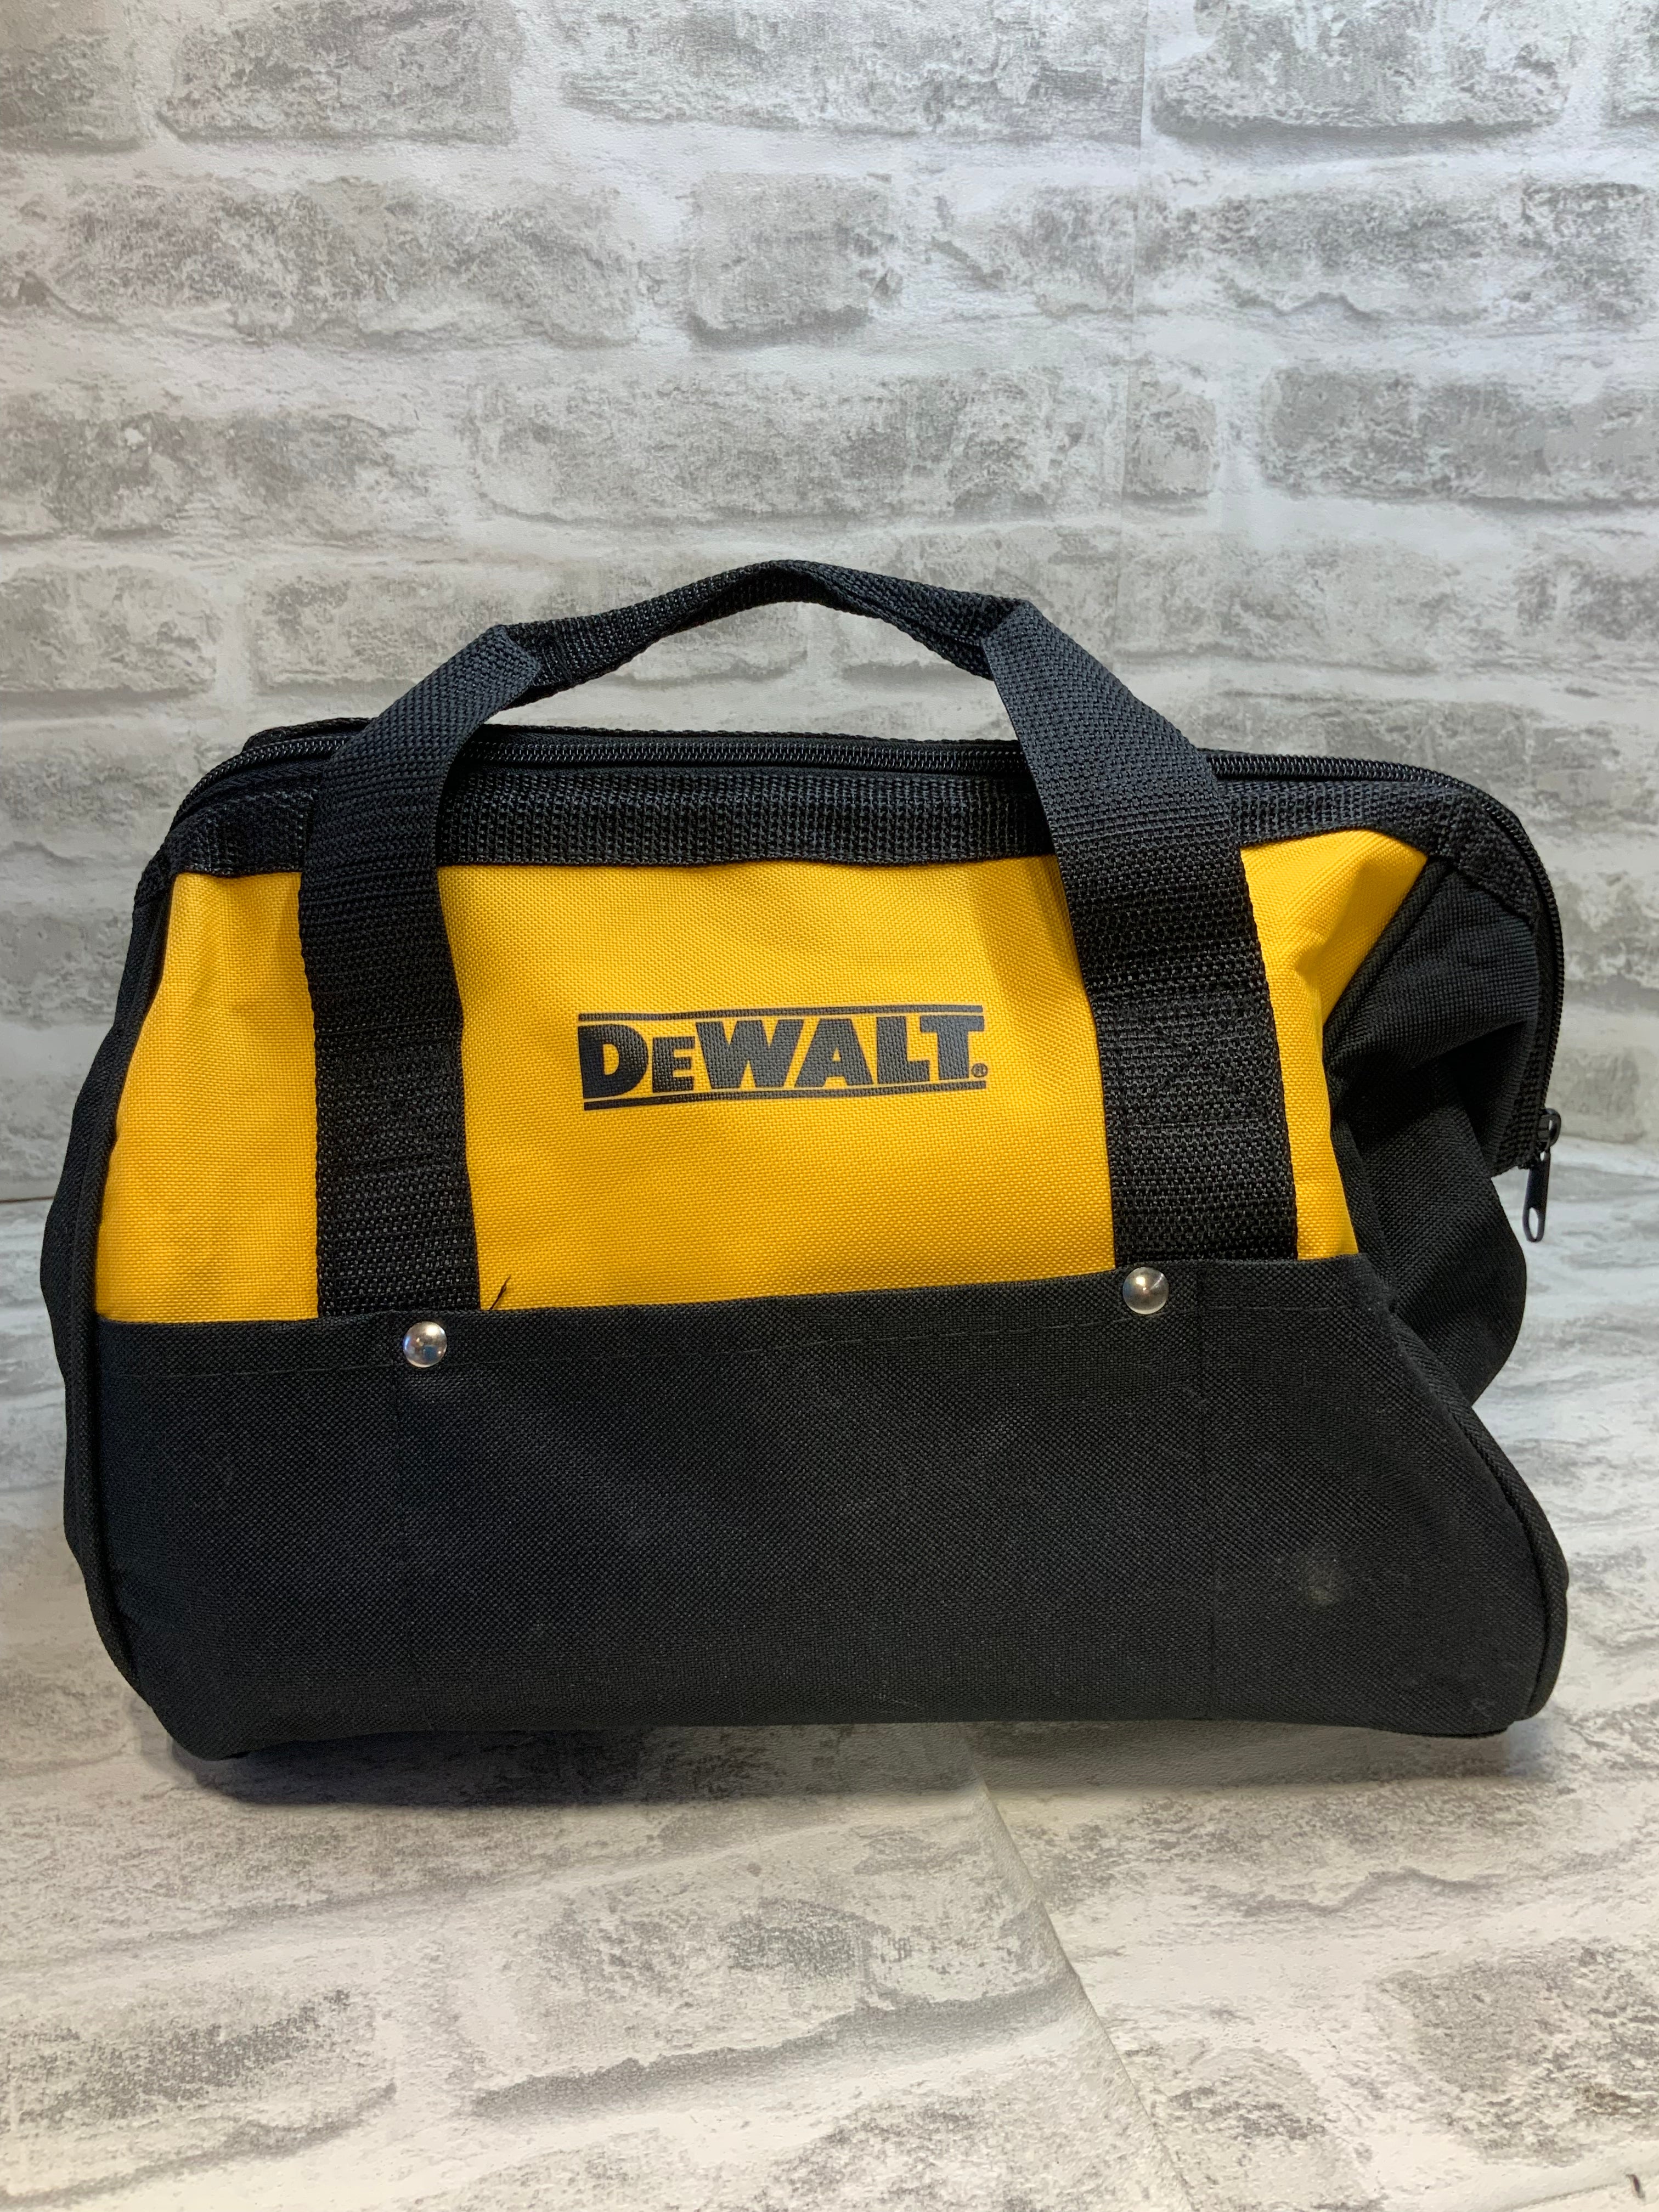 DEWALT 20V Max Cordless Drill Combo Kit, (DCK240C2), Drill Driver/Impact (7579854143726)